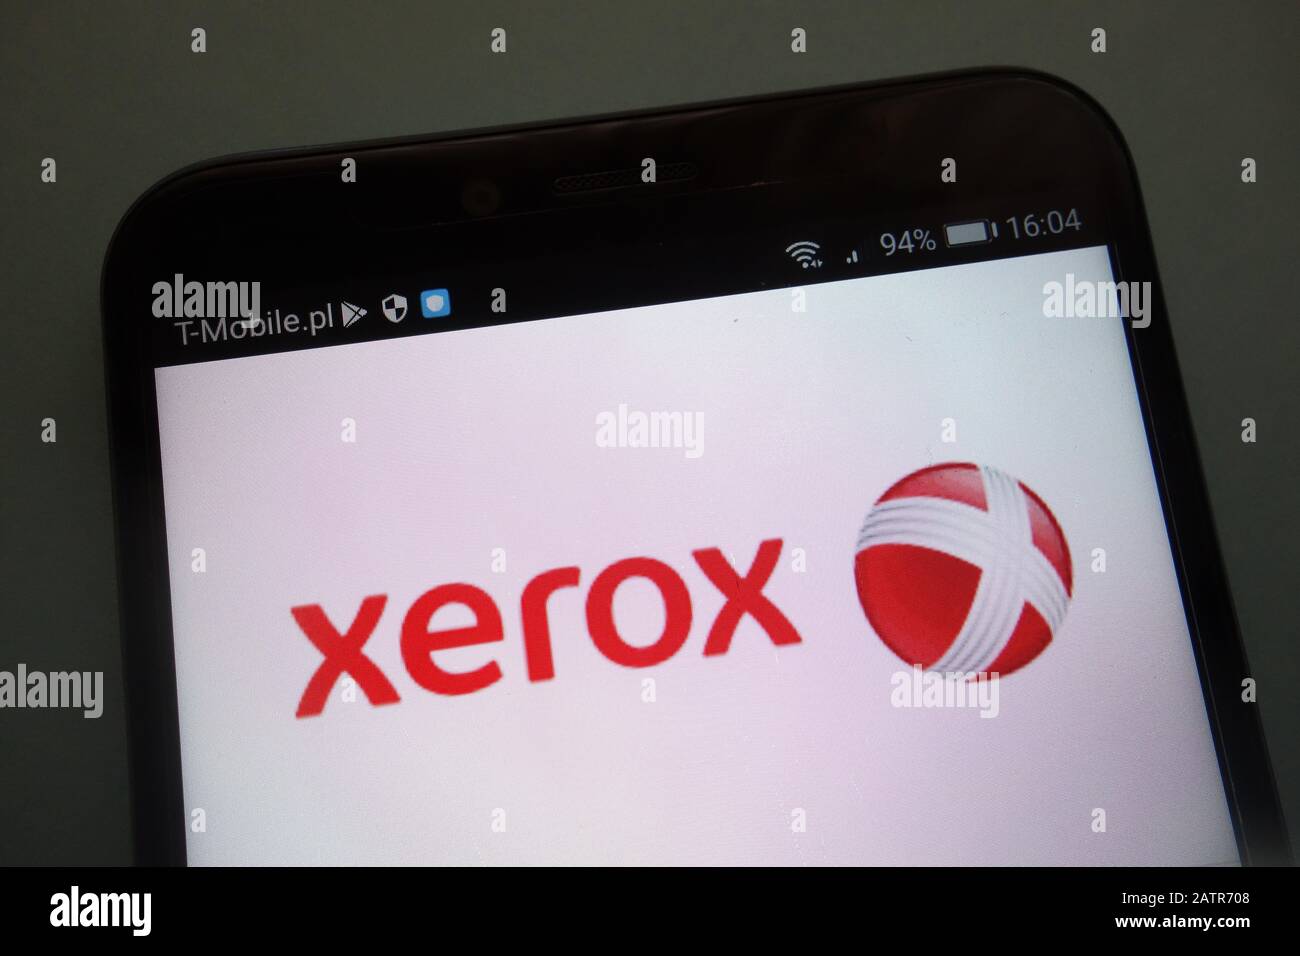 Xerox logo on smartphone Stock Photo